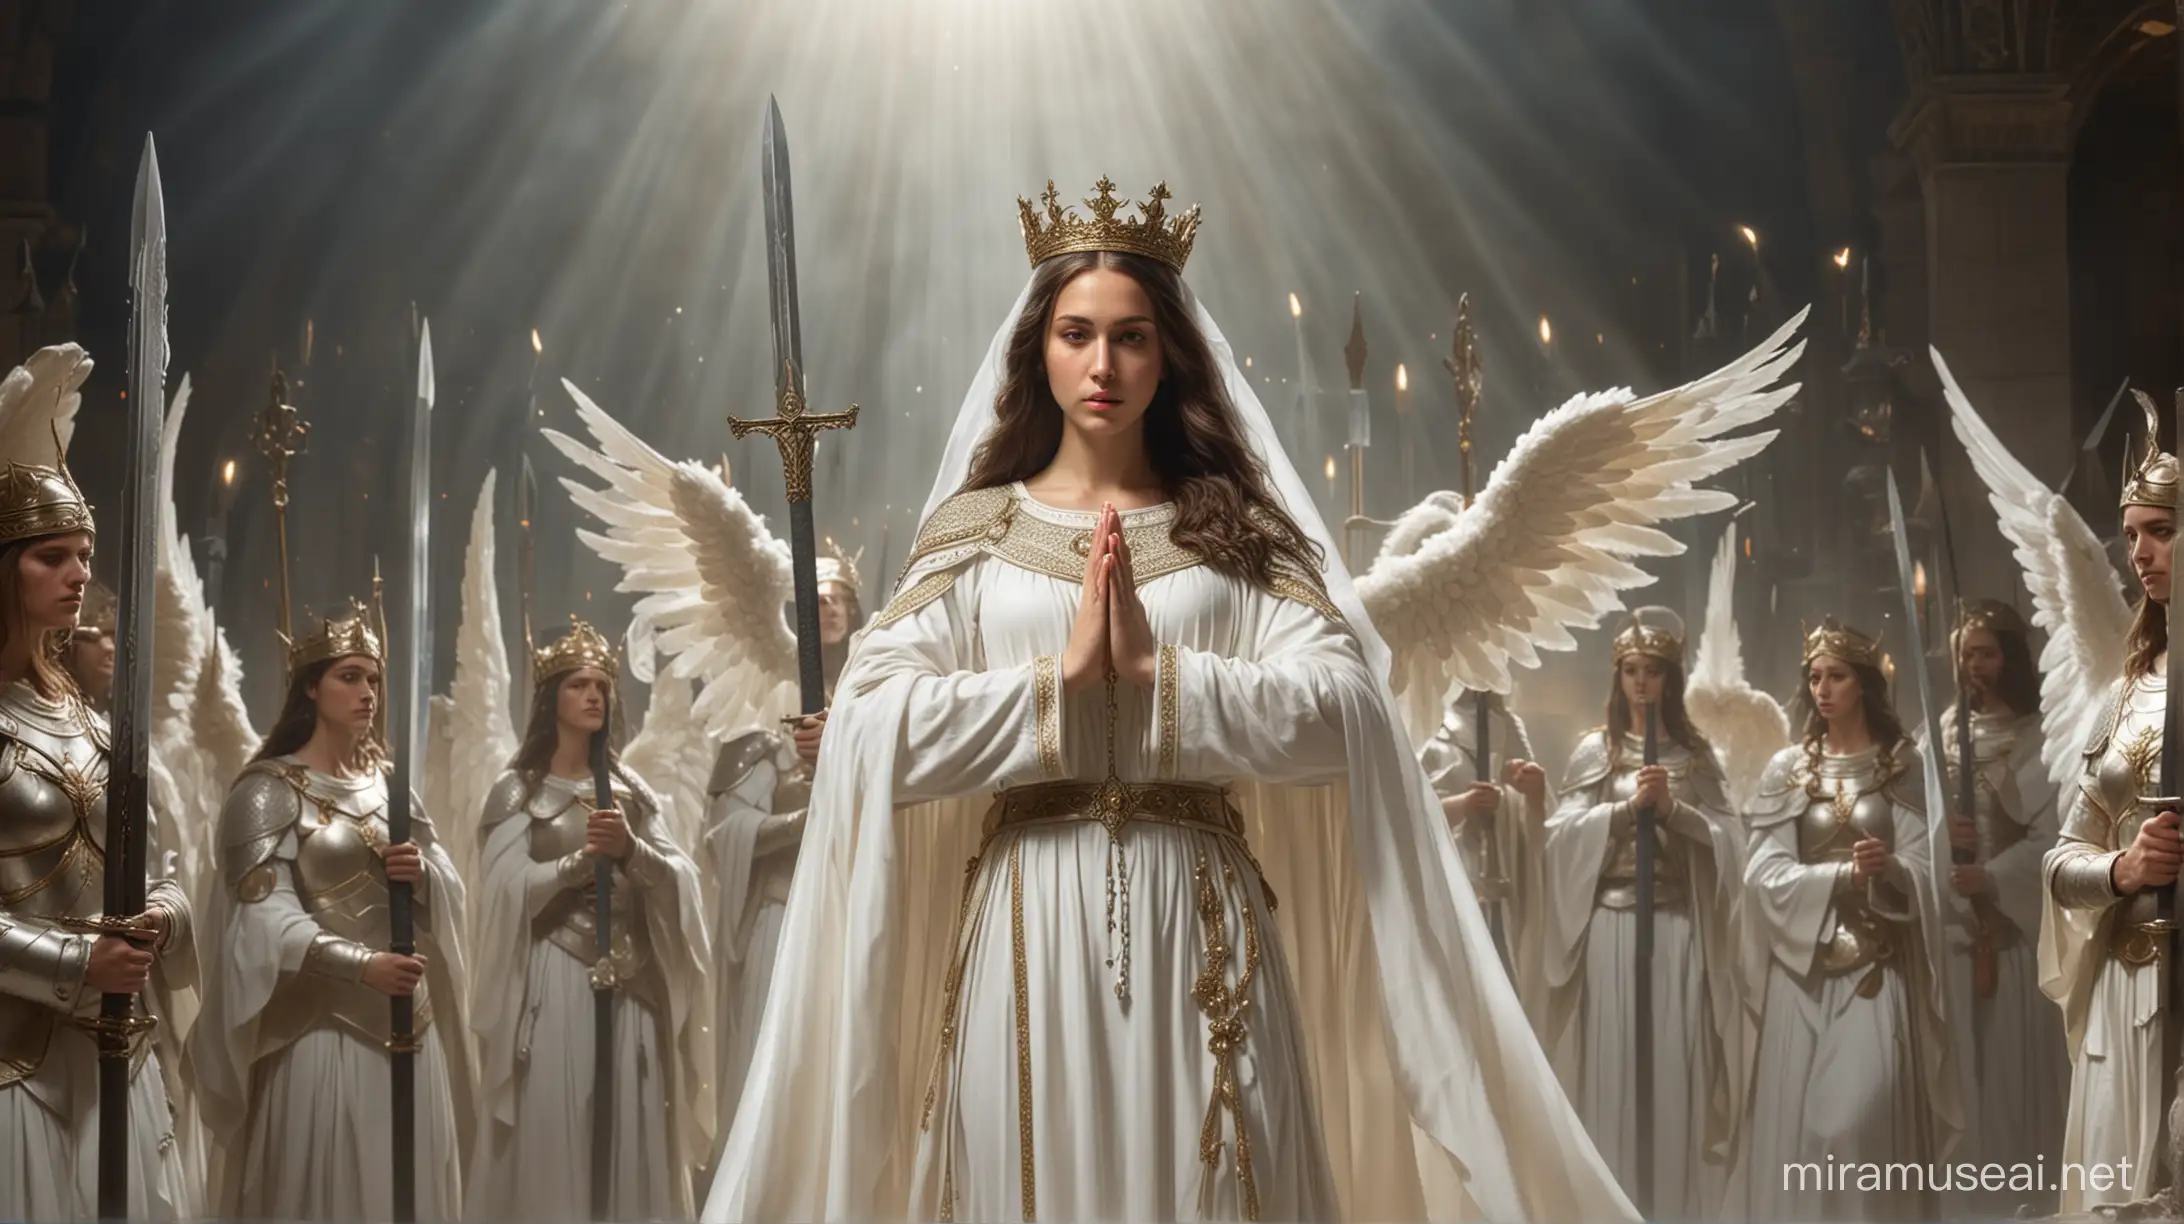 Virgin Mary in Armor Leading Angel Warriors